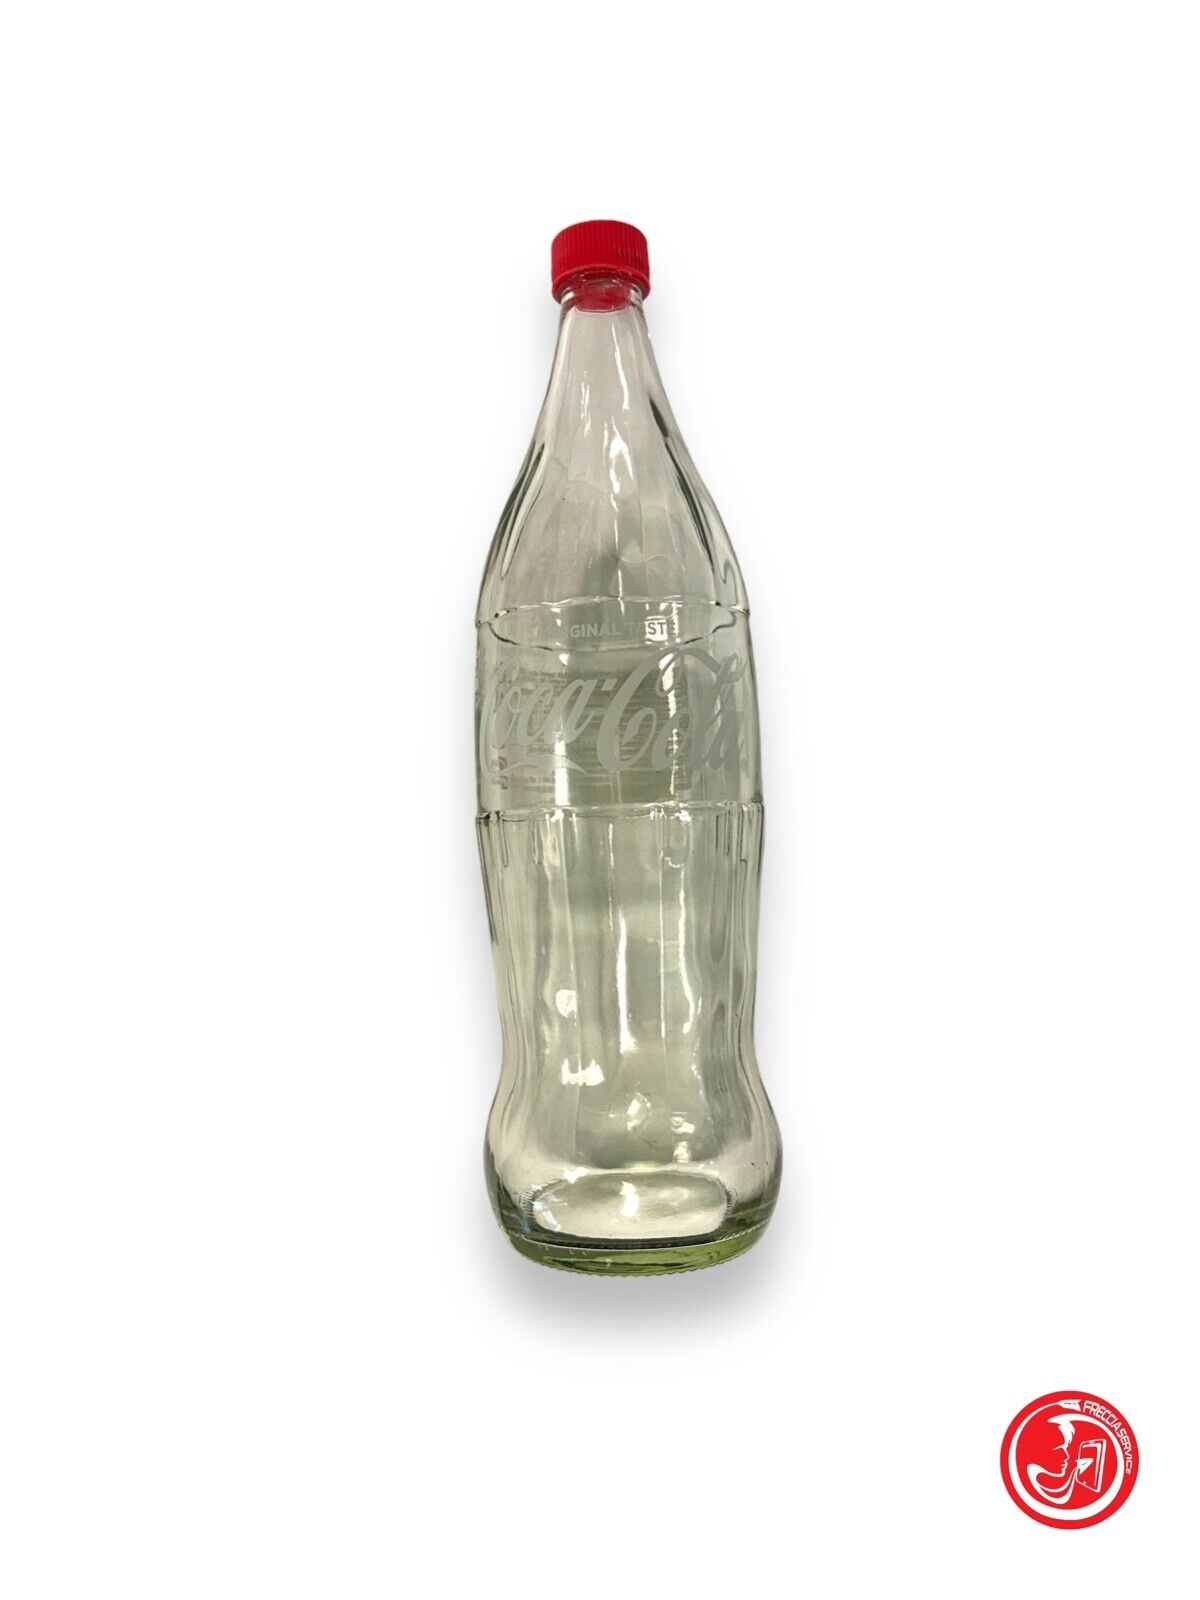 Collectible Coca-Cola bottle 